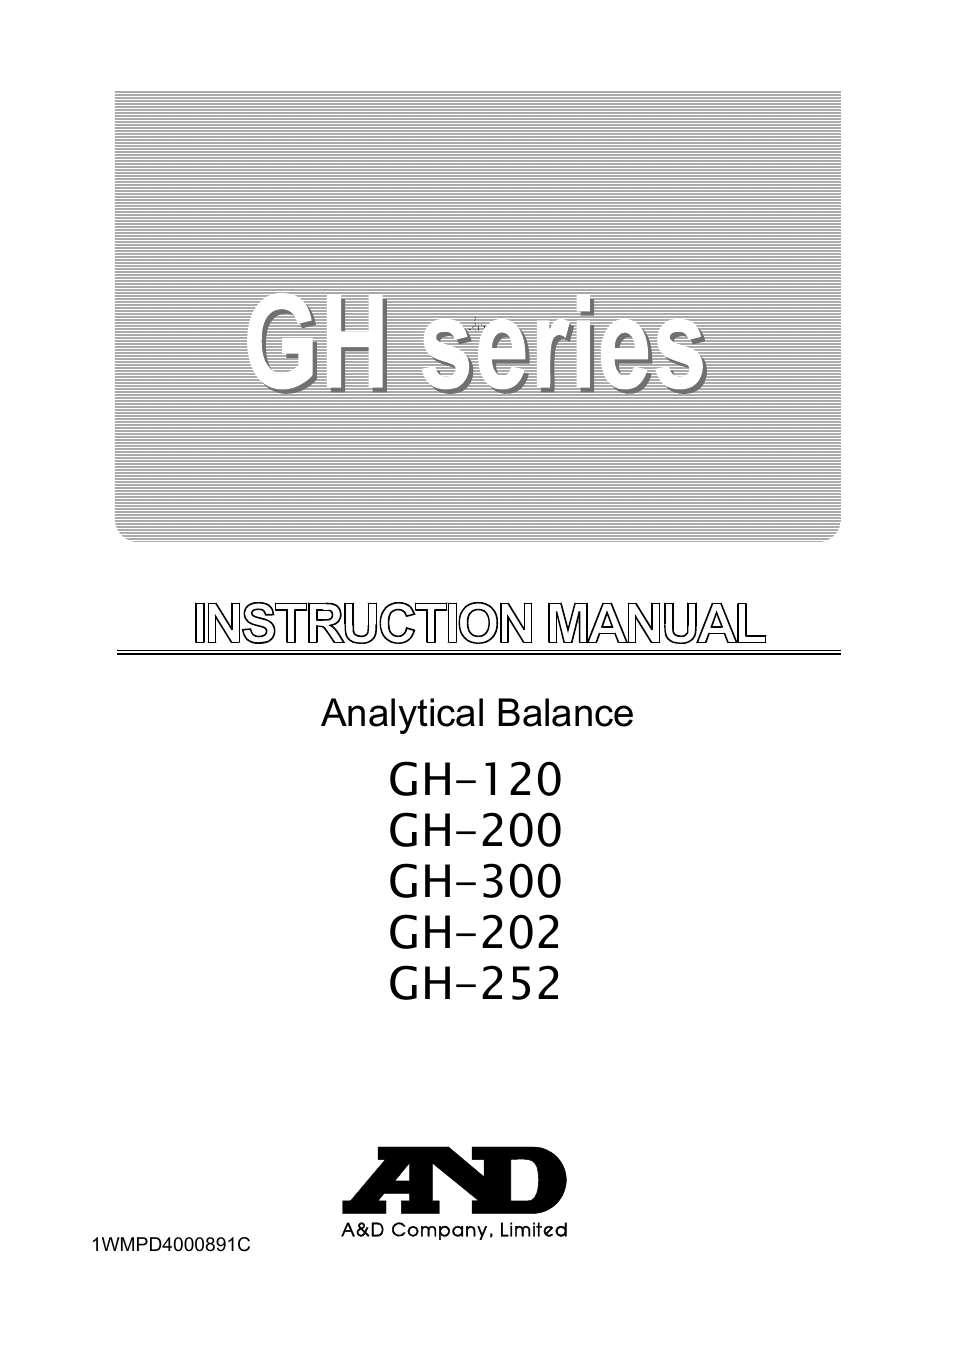 A & D Analytical Balance GH-120/GH-200/GH-300/GH-202/GH-252